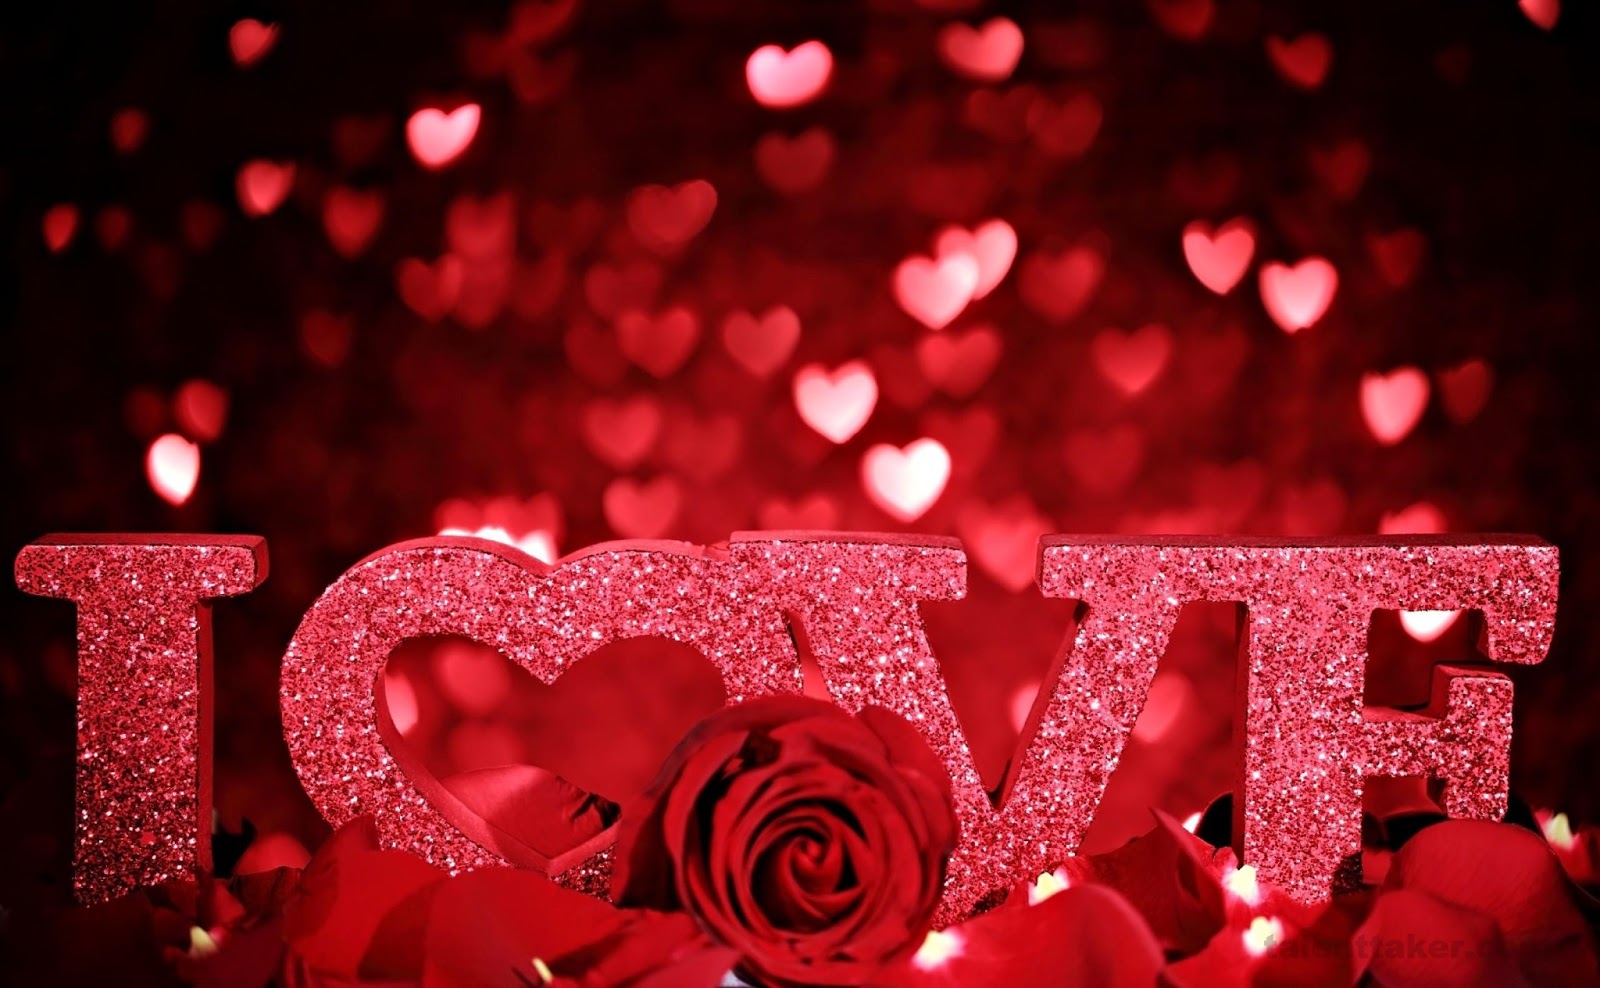 http://2.bp.blogspot.com/-mMtwul0tK6U/URogUwEew3I/AAAAAAAAF6o/dhrCIaAVqfU/s1600/valentines_day_love_inscription_rose_petals_romance_hearts_glitter_35853_2560x1580.jpg